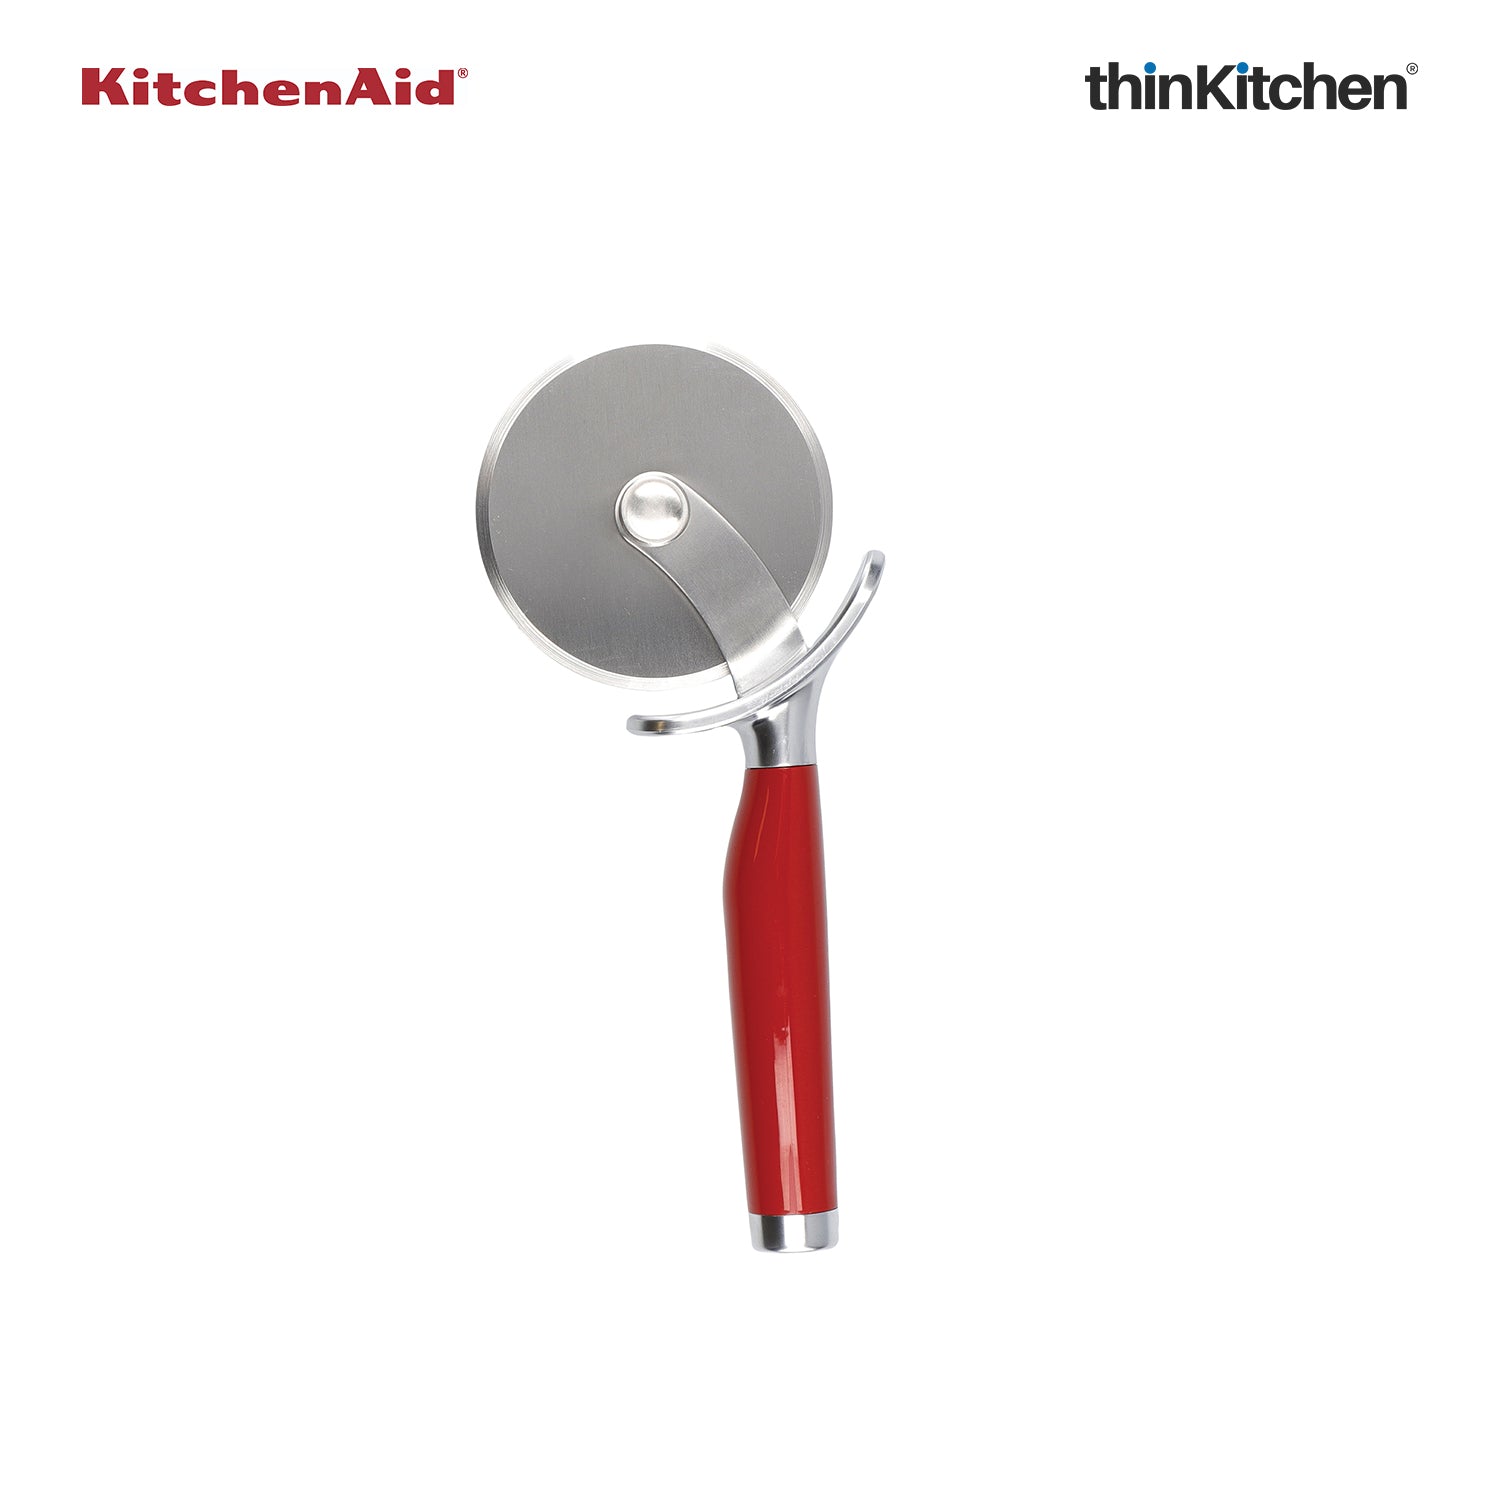 KitchenAid, Kitchen, Kitchenaid Ice Cream Scoop Pizza Wheel Cutter